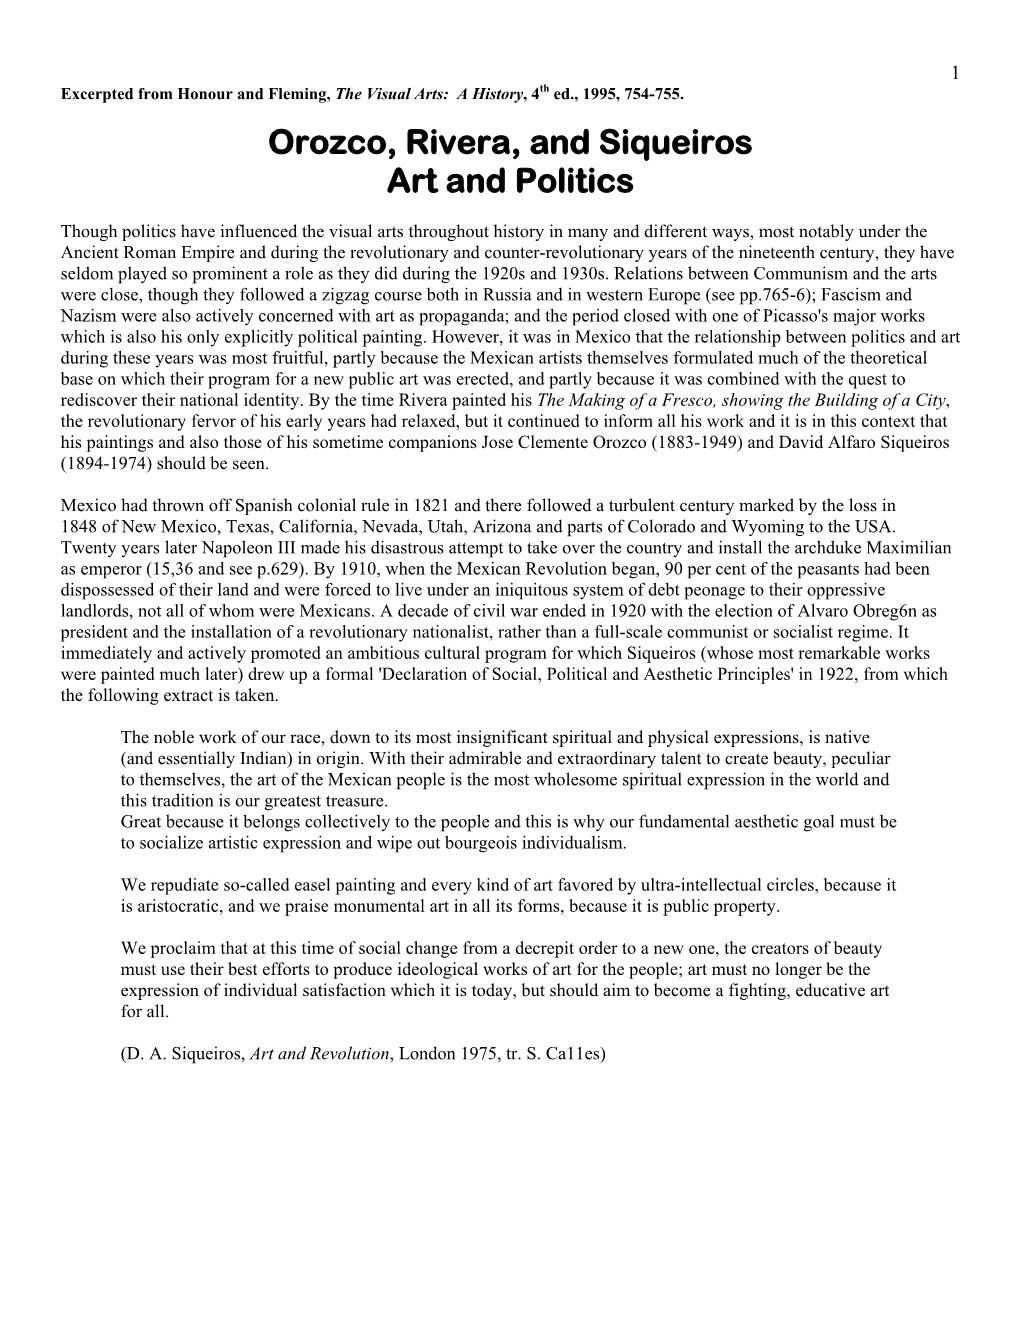 Orozco, Rivera, and Siqueiros Art and Politics